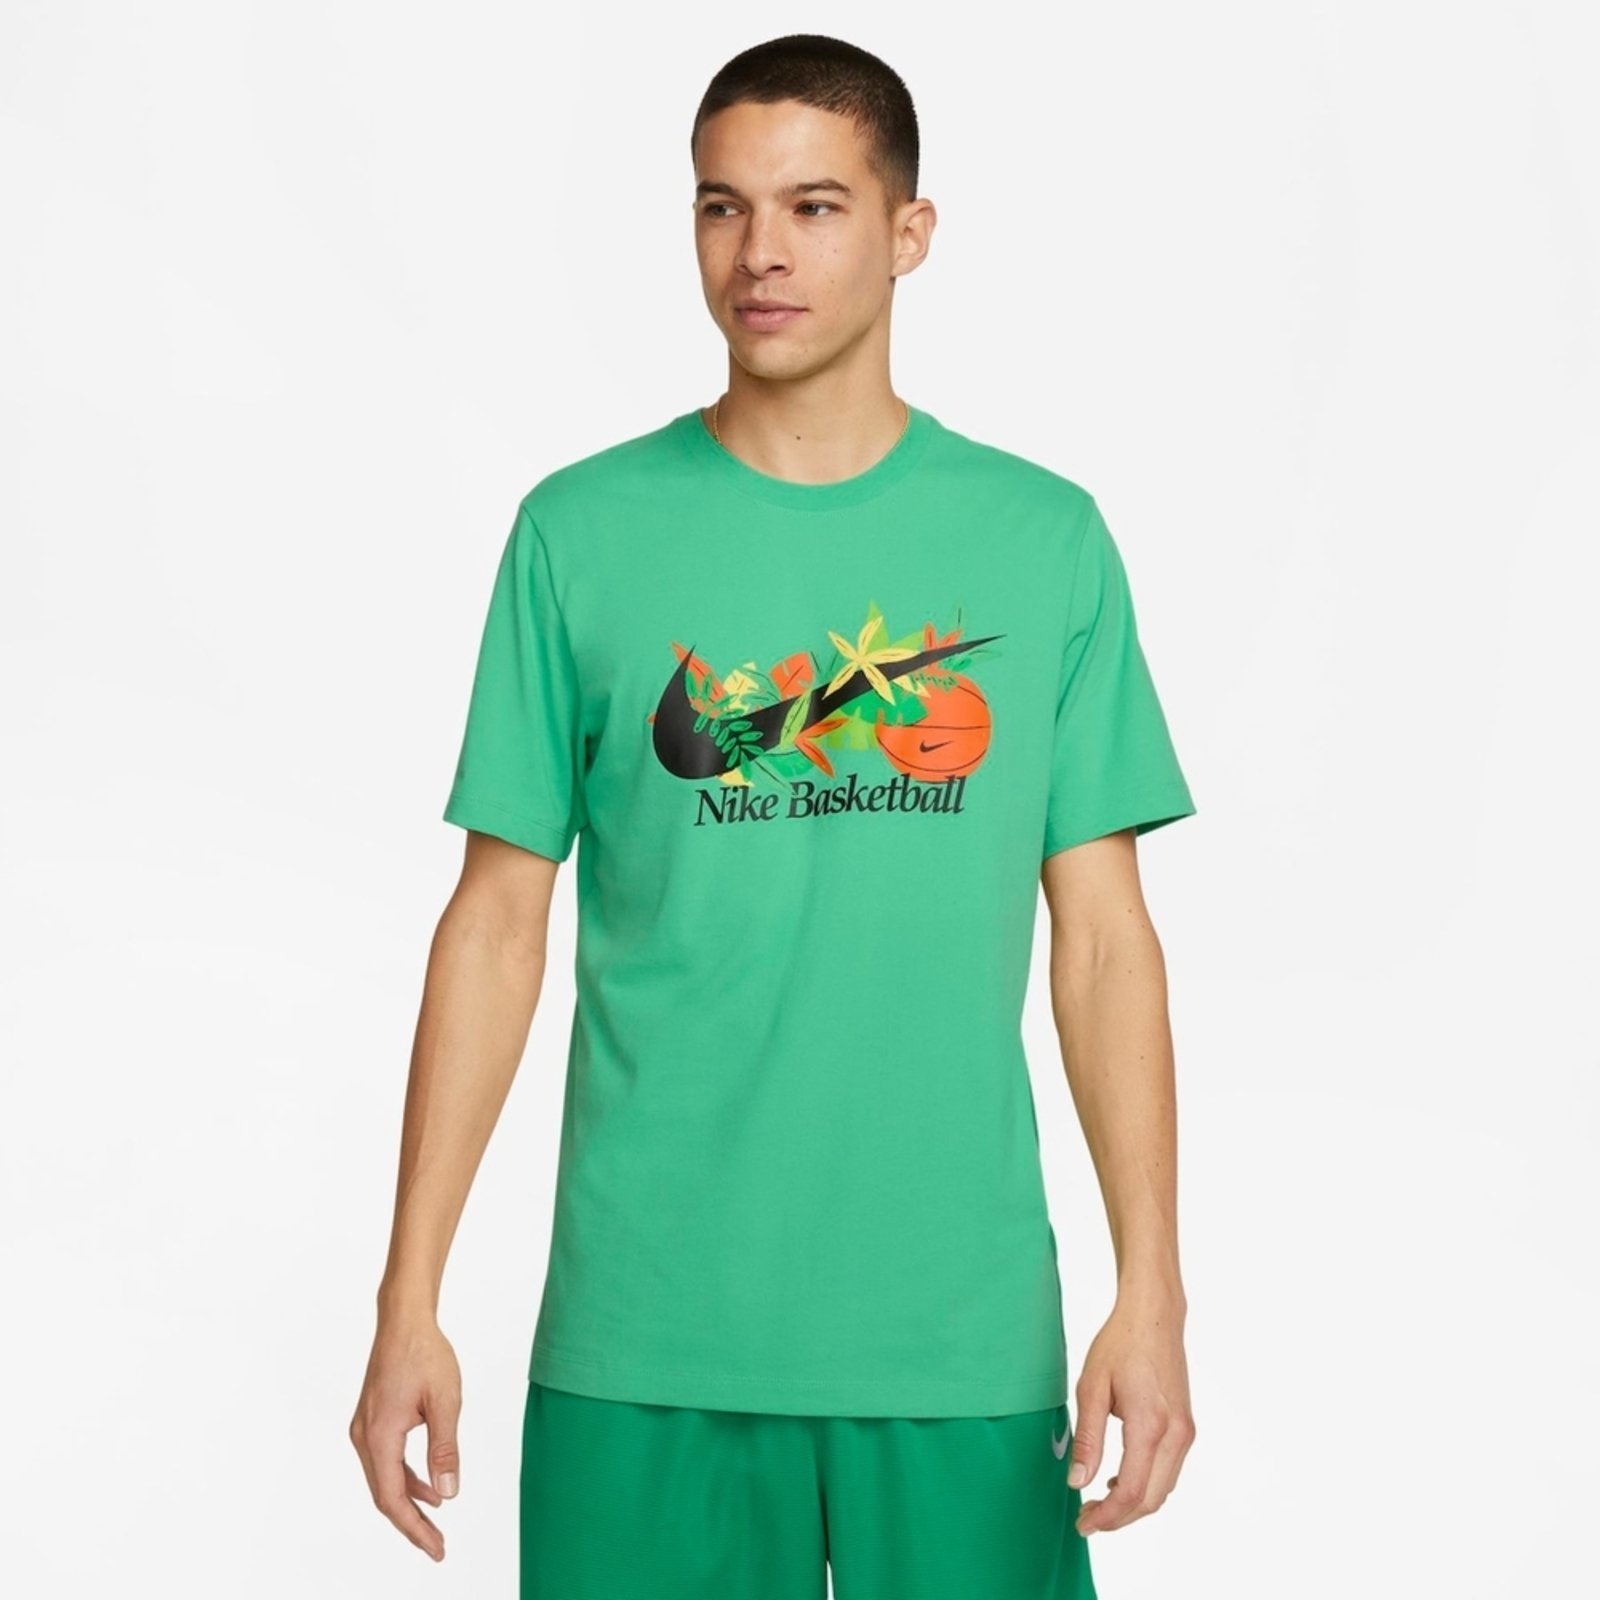 Camiseta Nike Dri-FIT Masculina - Compre Agora